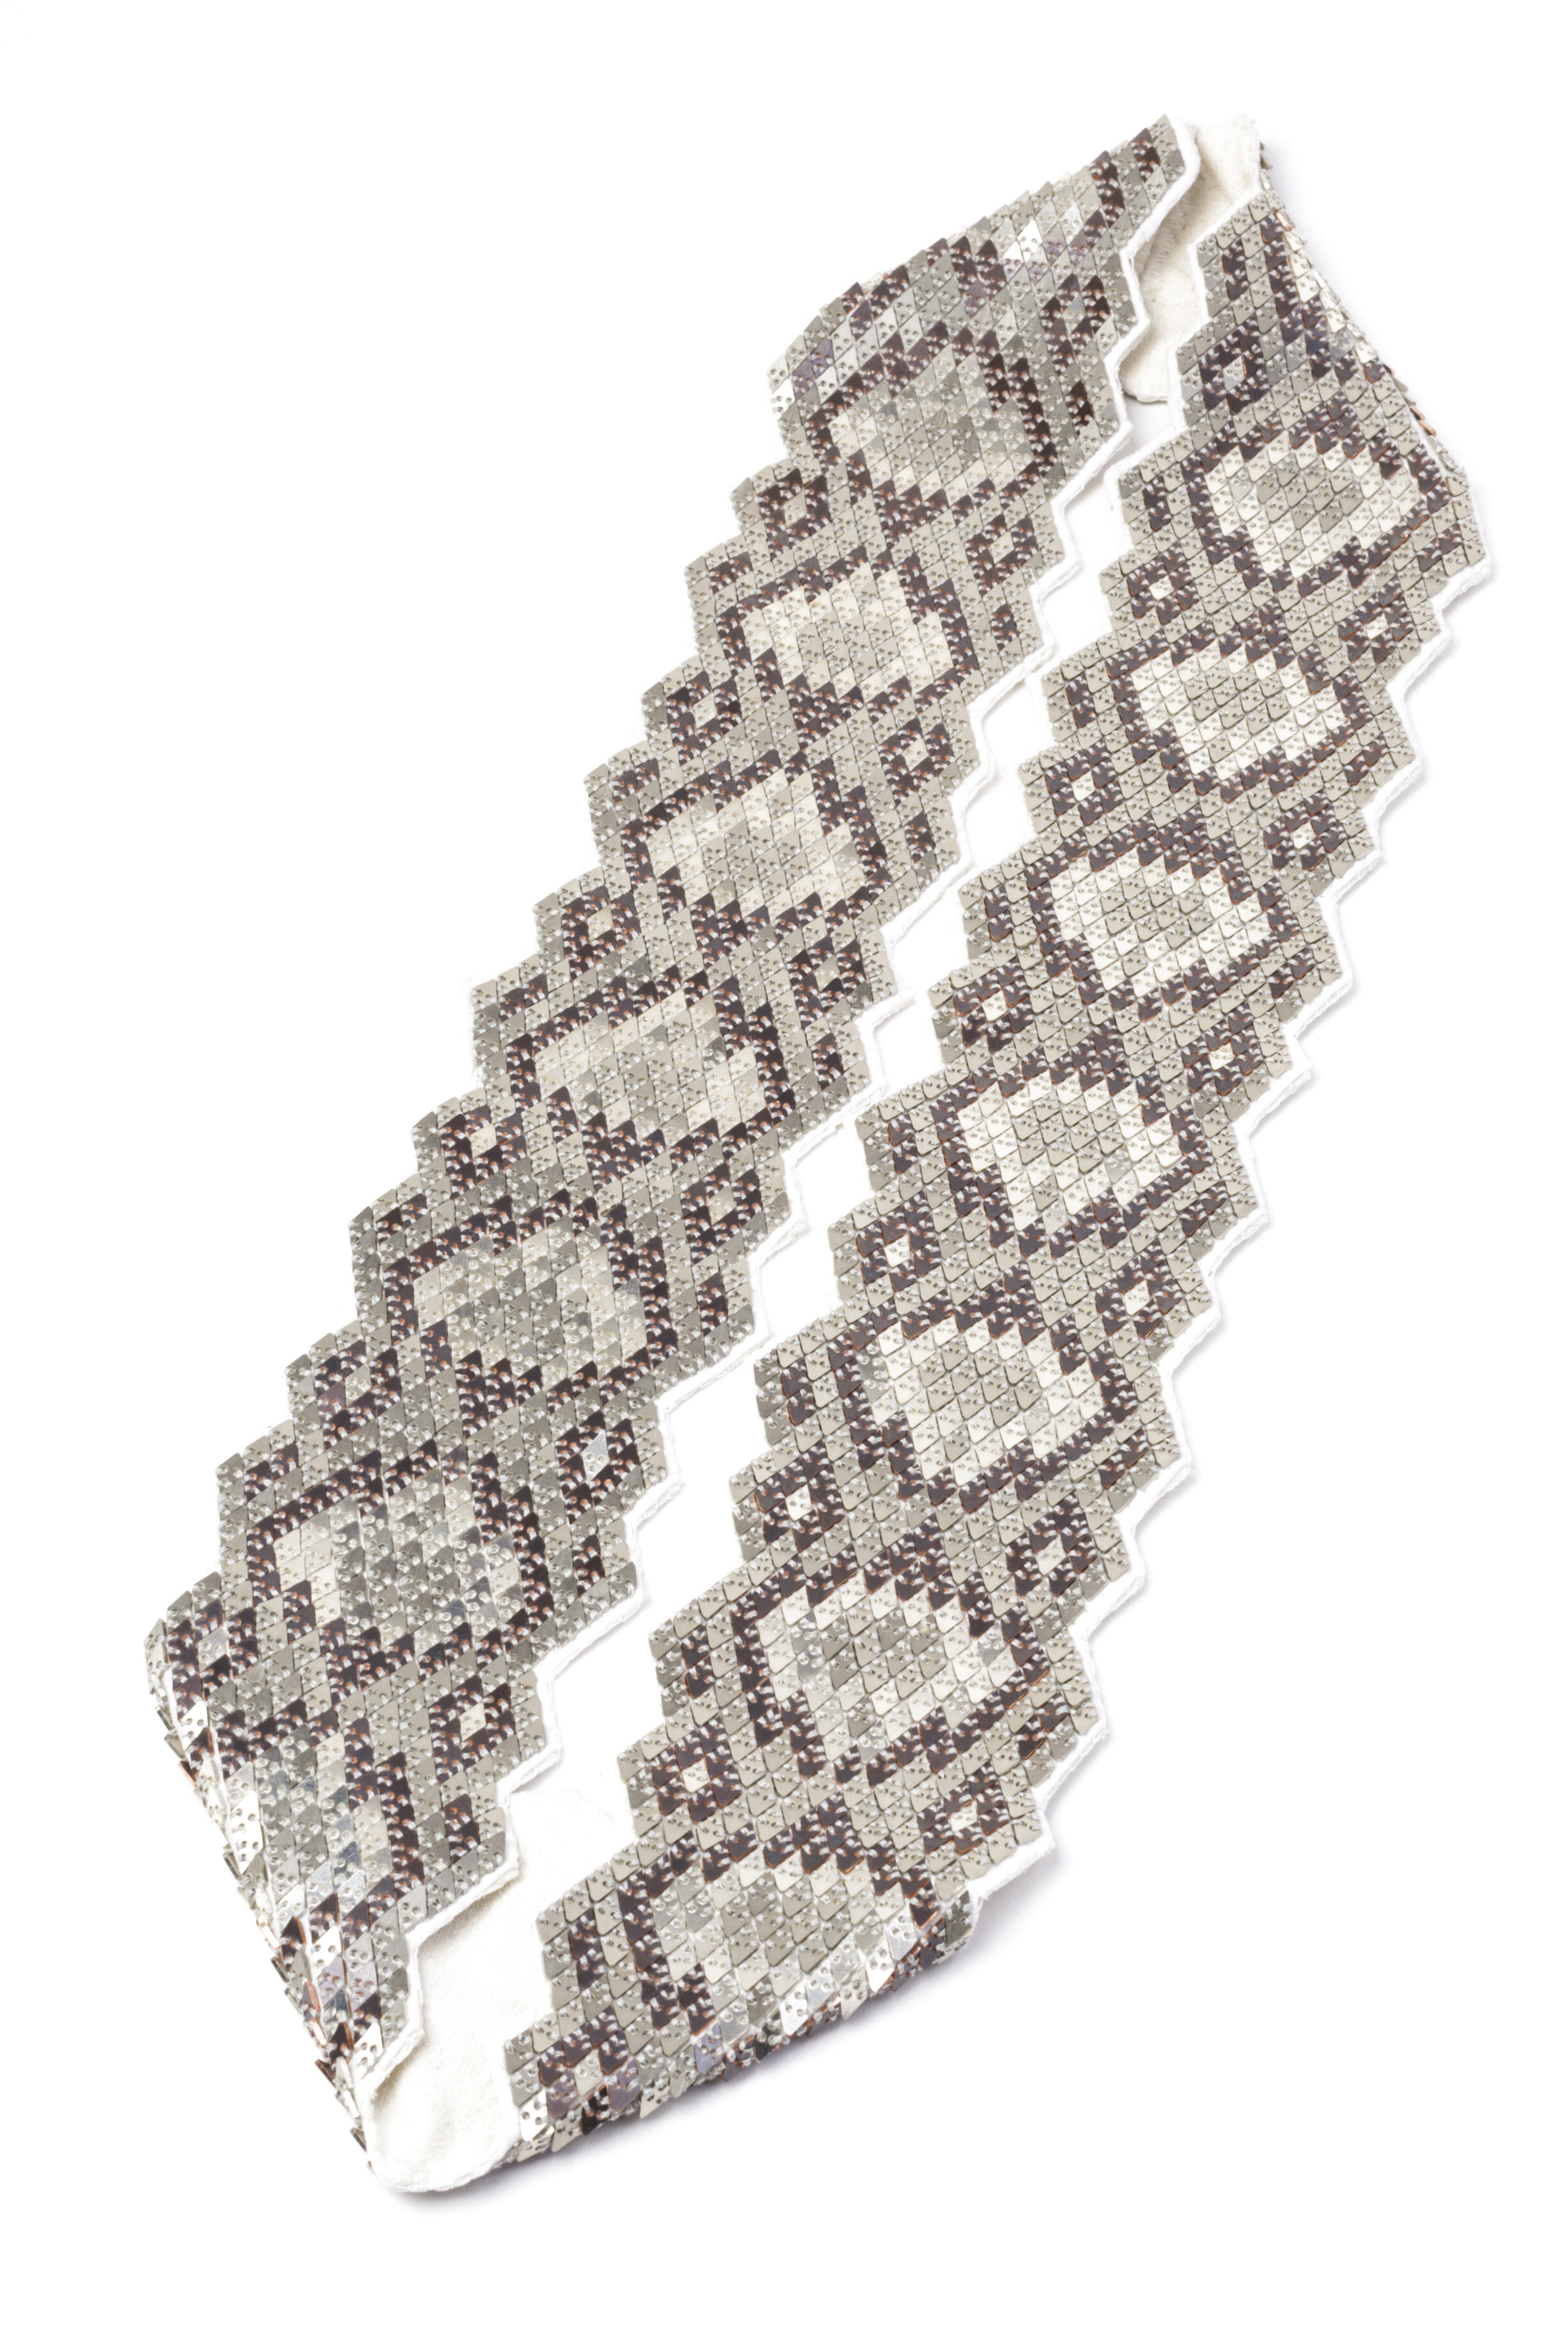   Silver Snakeskin Necklace   Silver, Nickel, Oxidized Copper, Raw Silk, Cotton, Thread  20”x8”x.25”  2015    Photo by Jordan Baumgarten 